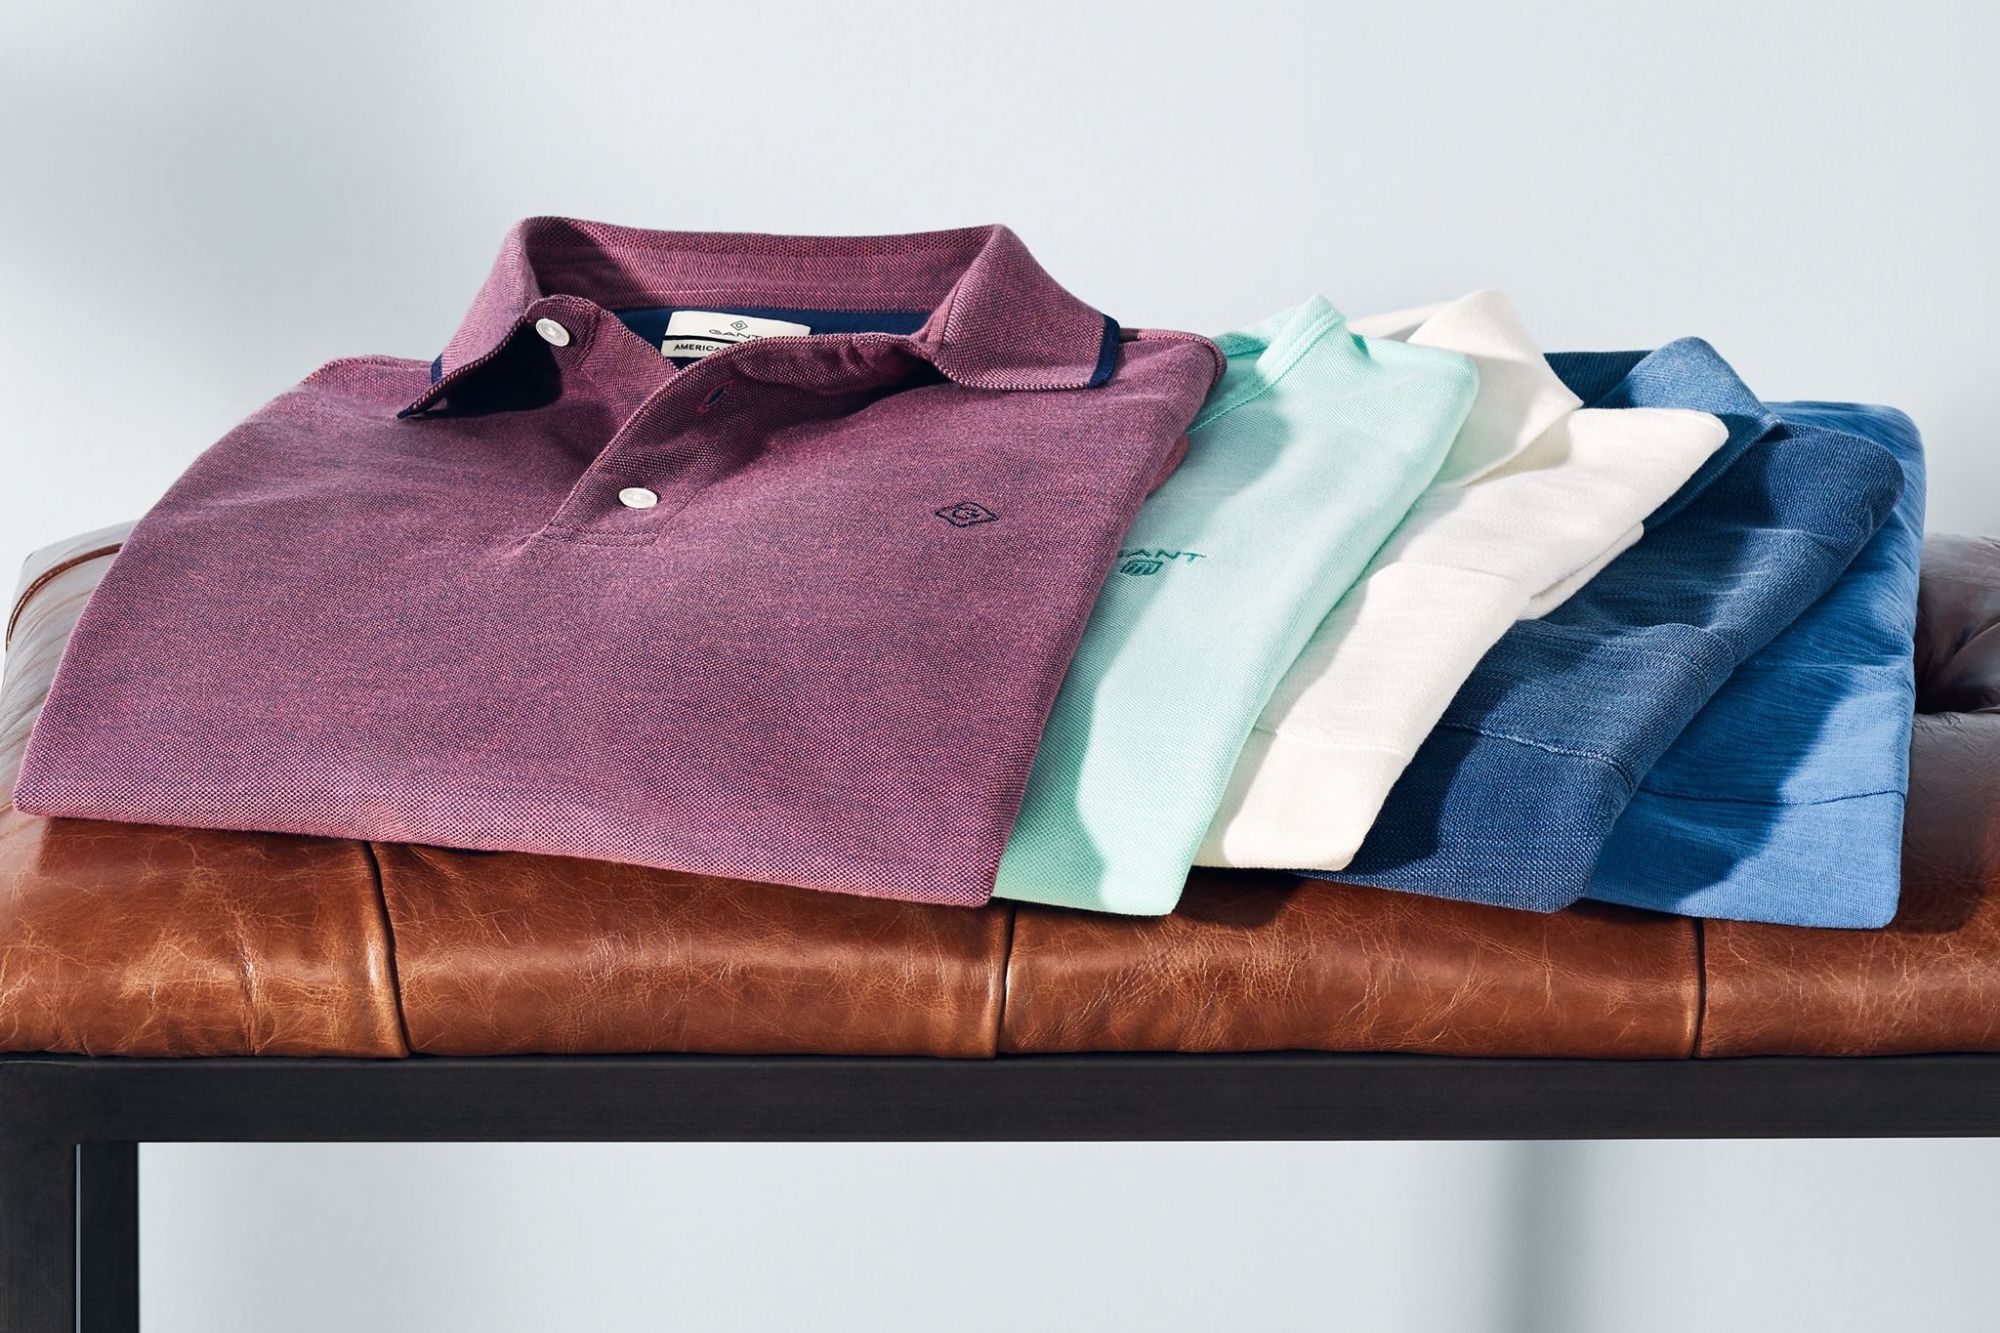 Gant Men's polo shirts folded on leather footstool